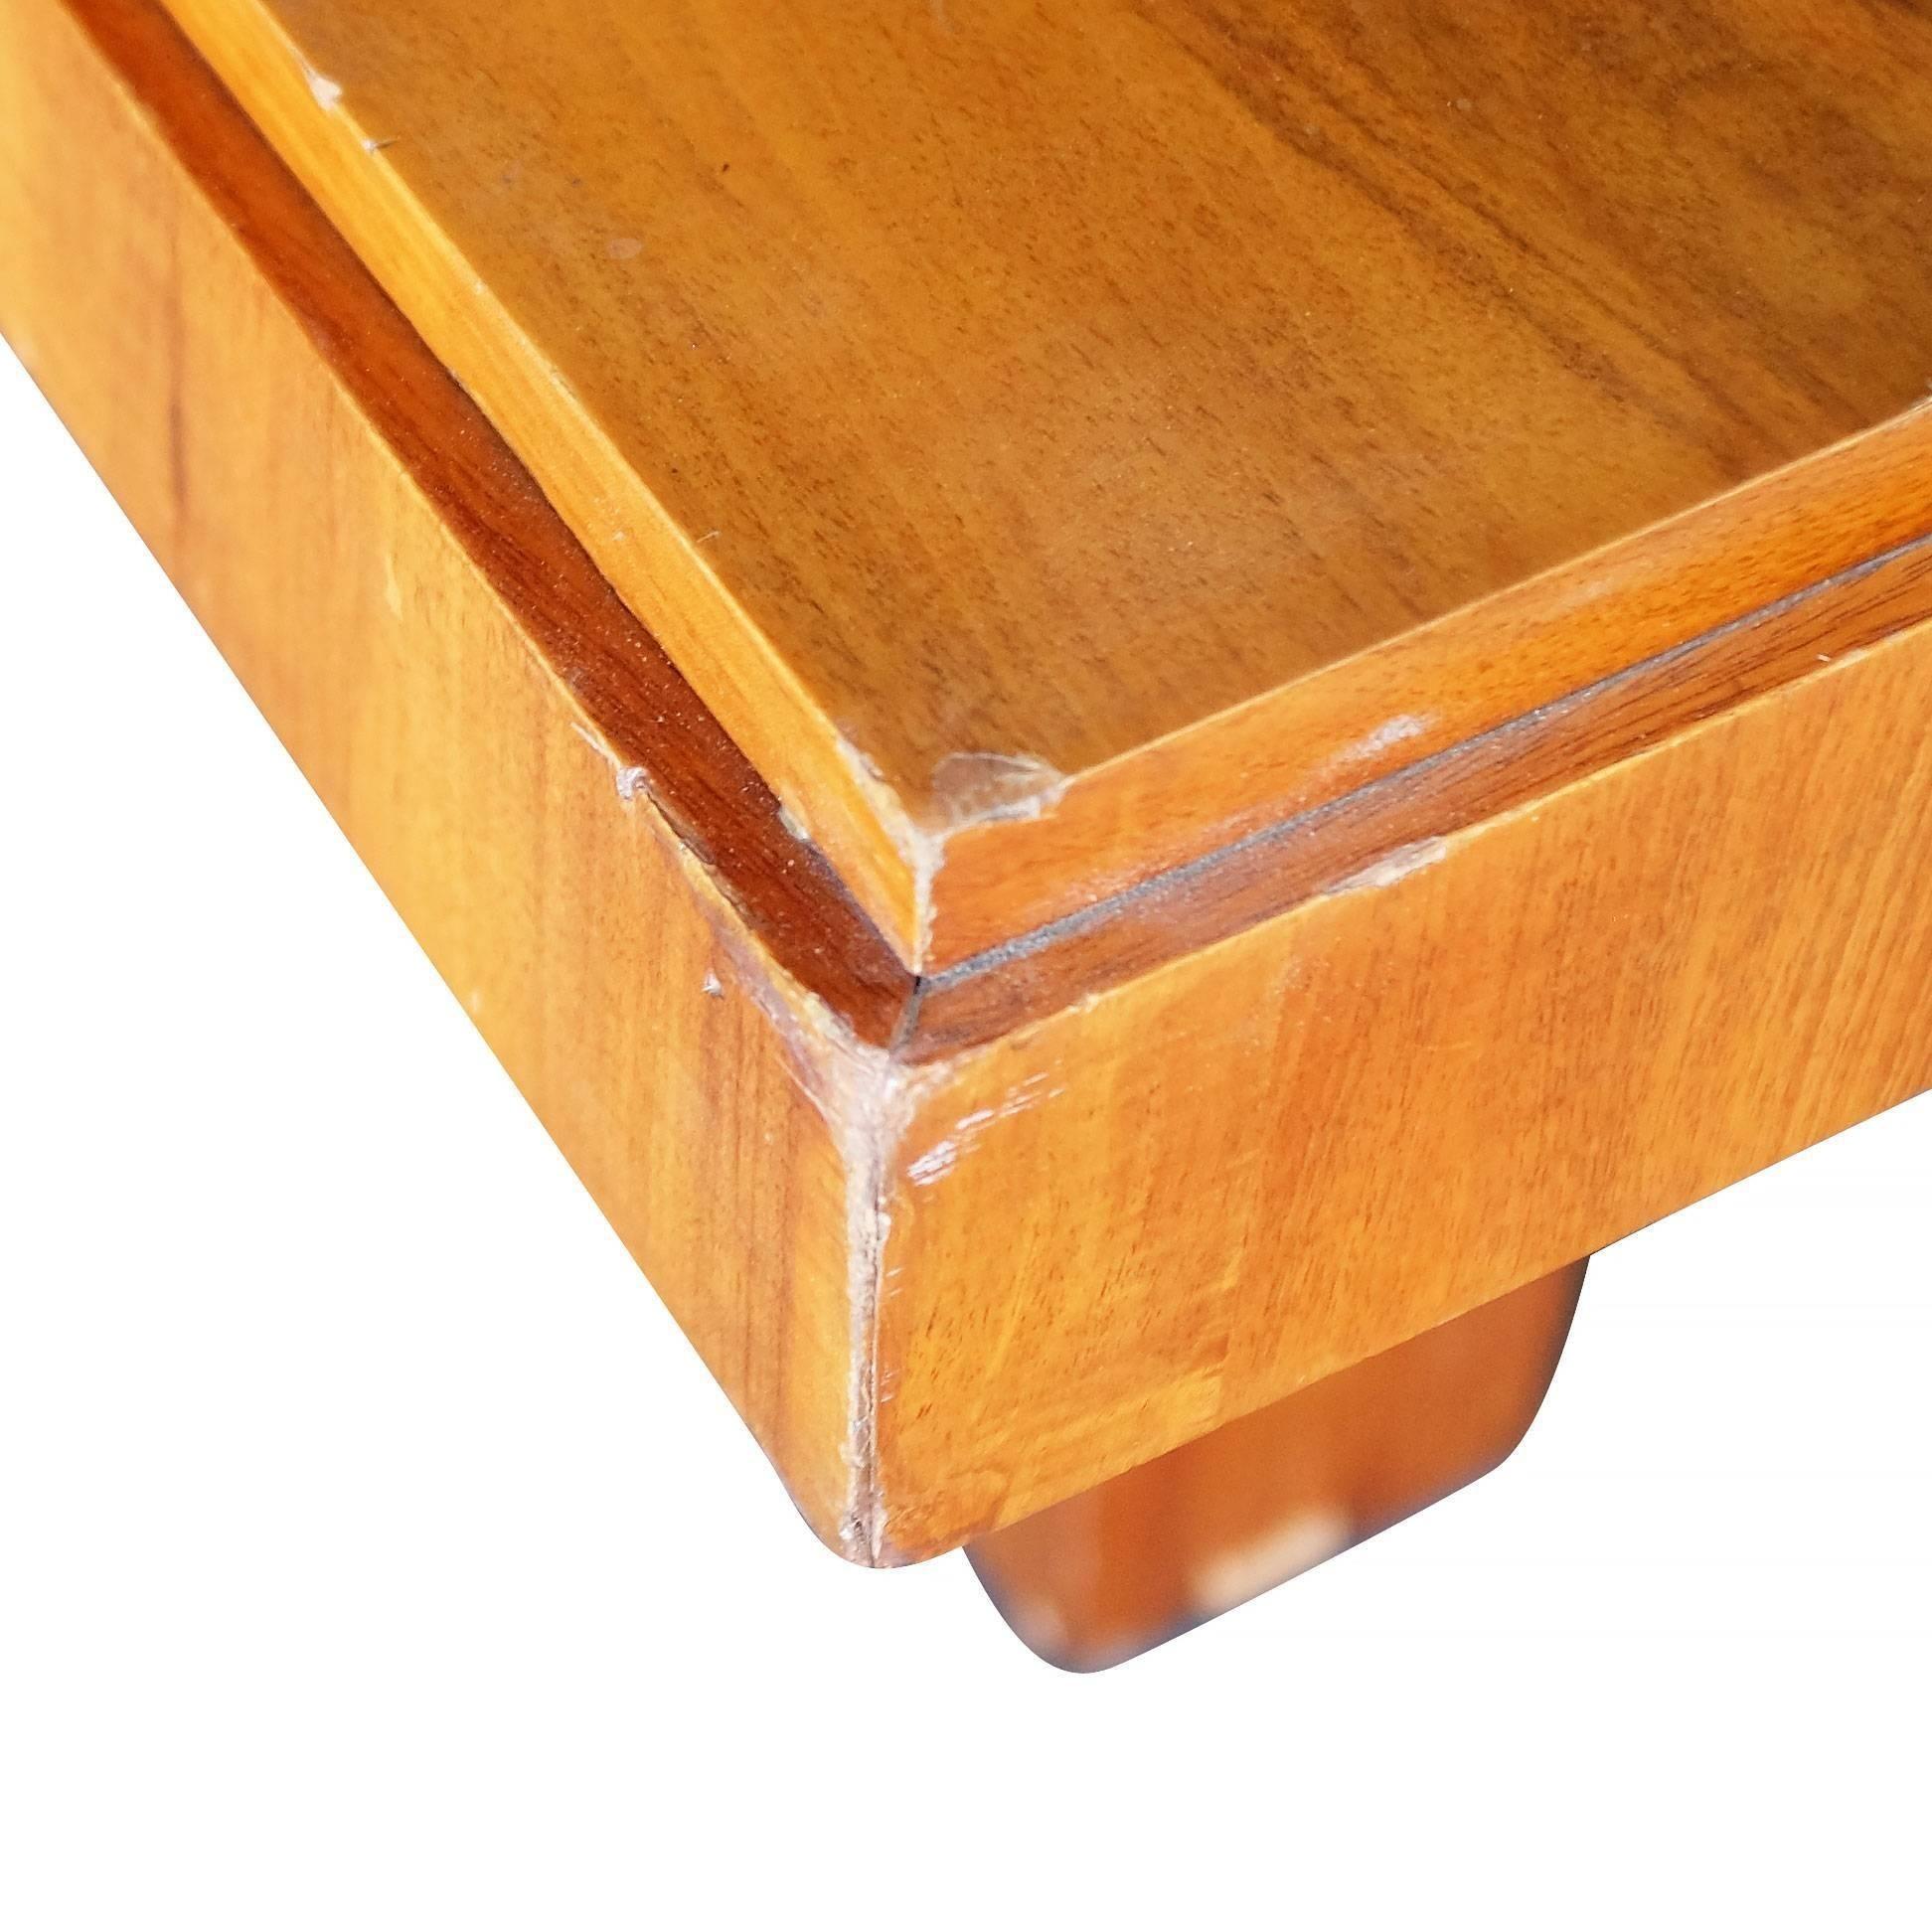 Hardwood Charles Dudouyt Cubist Inspired Walnut Desk / Dining Table For Sale